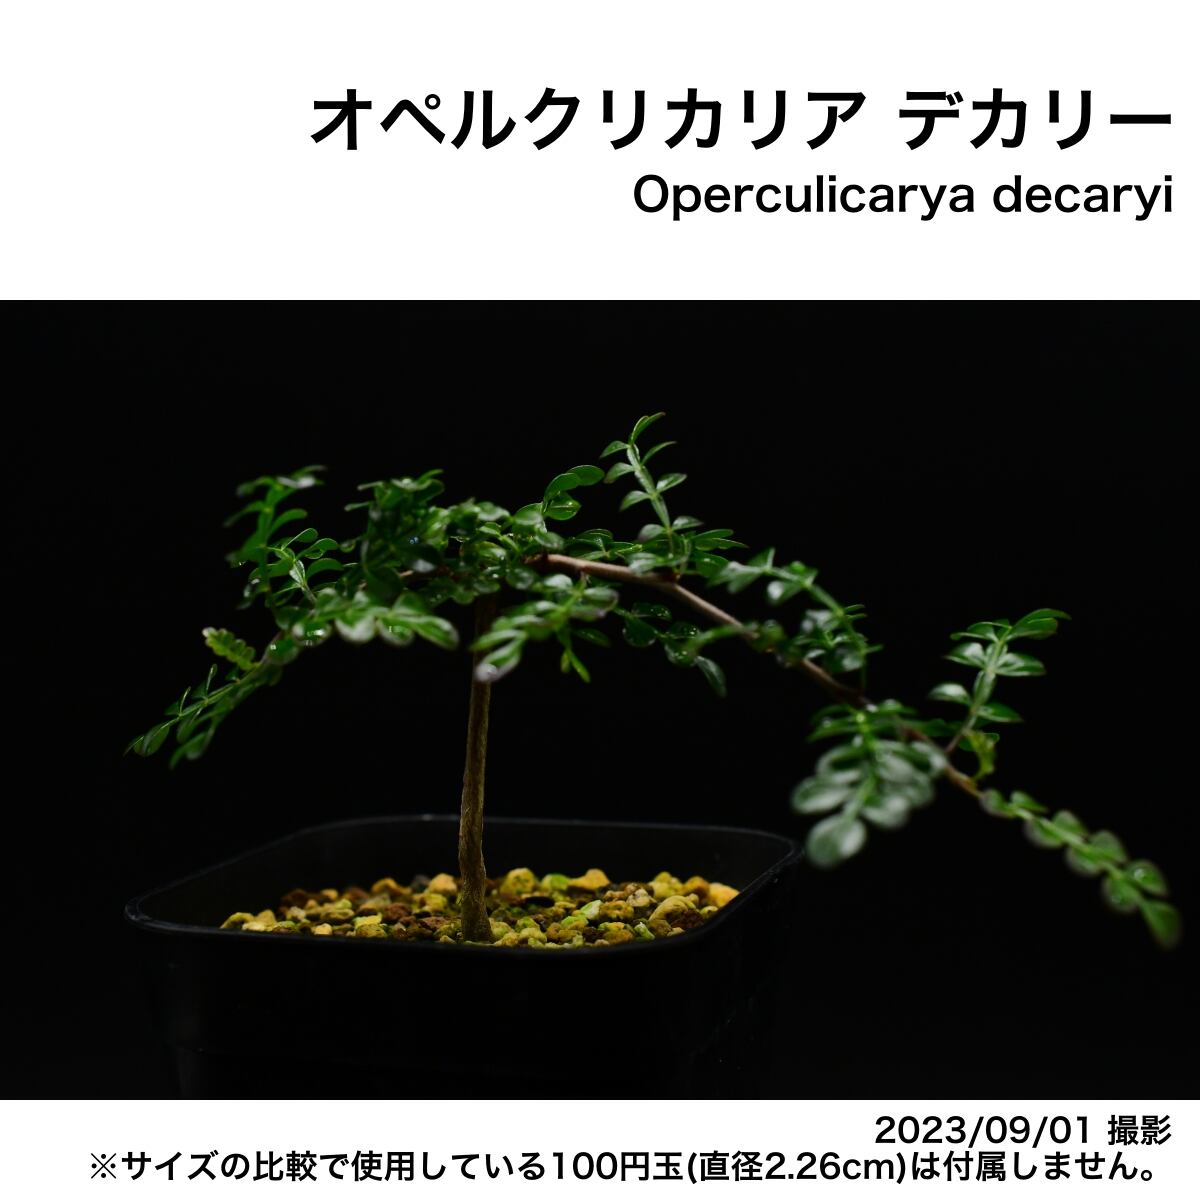 Operculicarya decaryiオペルクリカリア・デカリー 実生株 - プランター